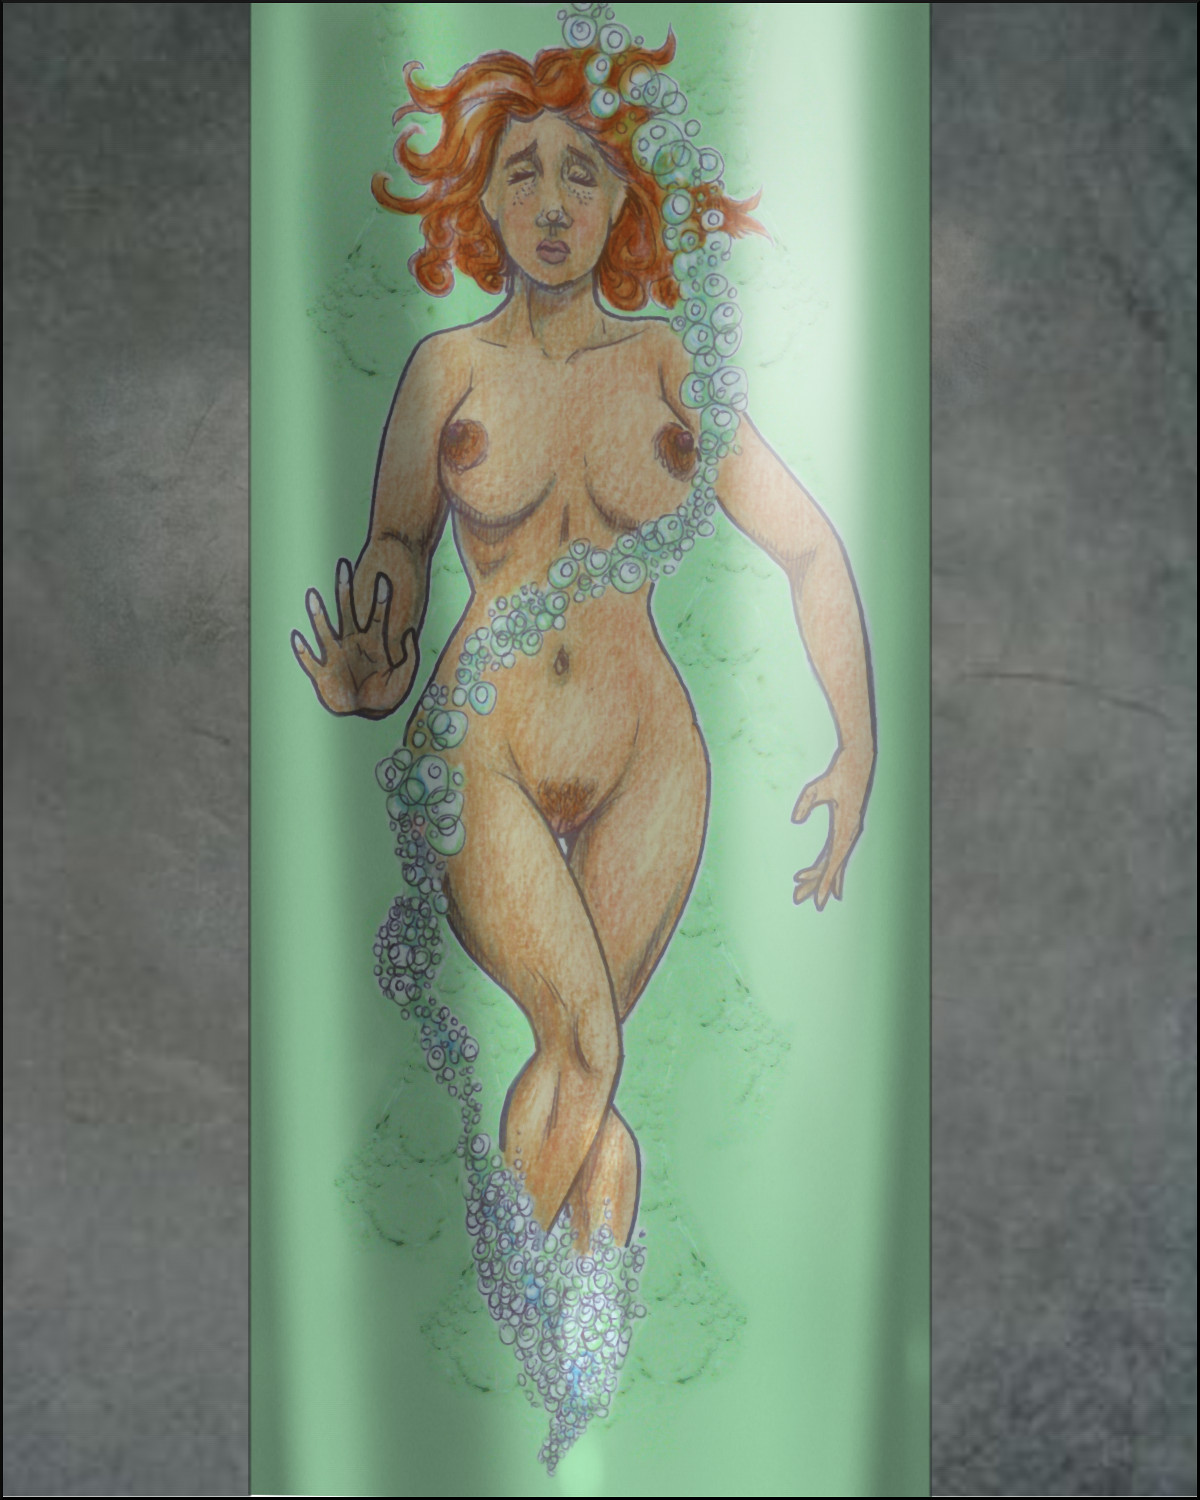 Naked Jireen dissolves in a tube.